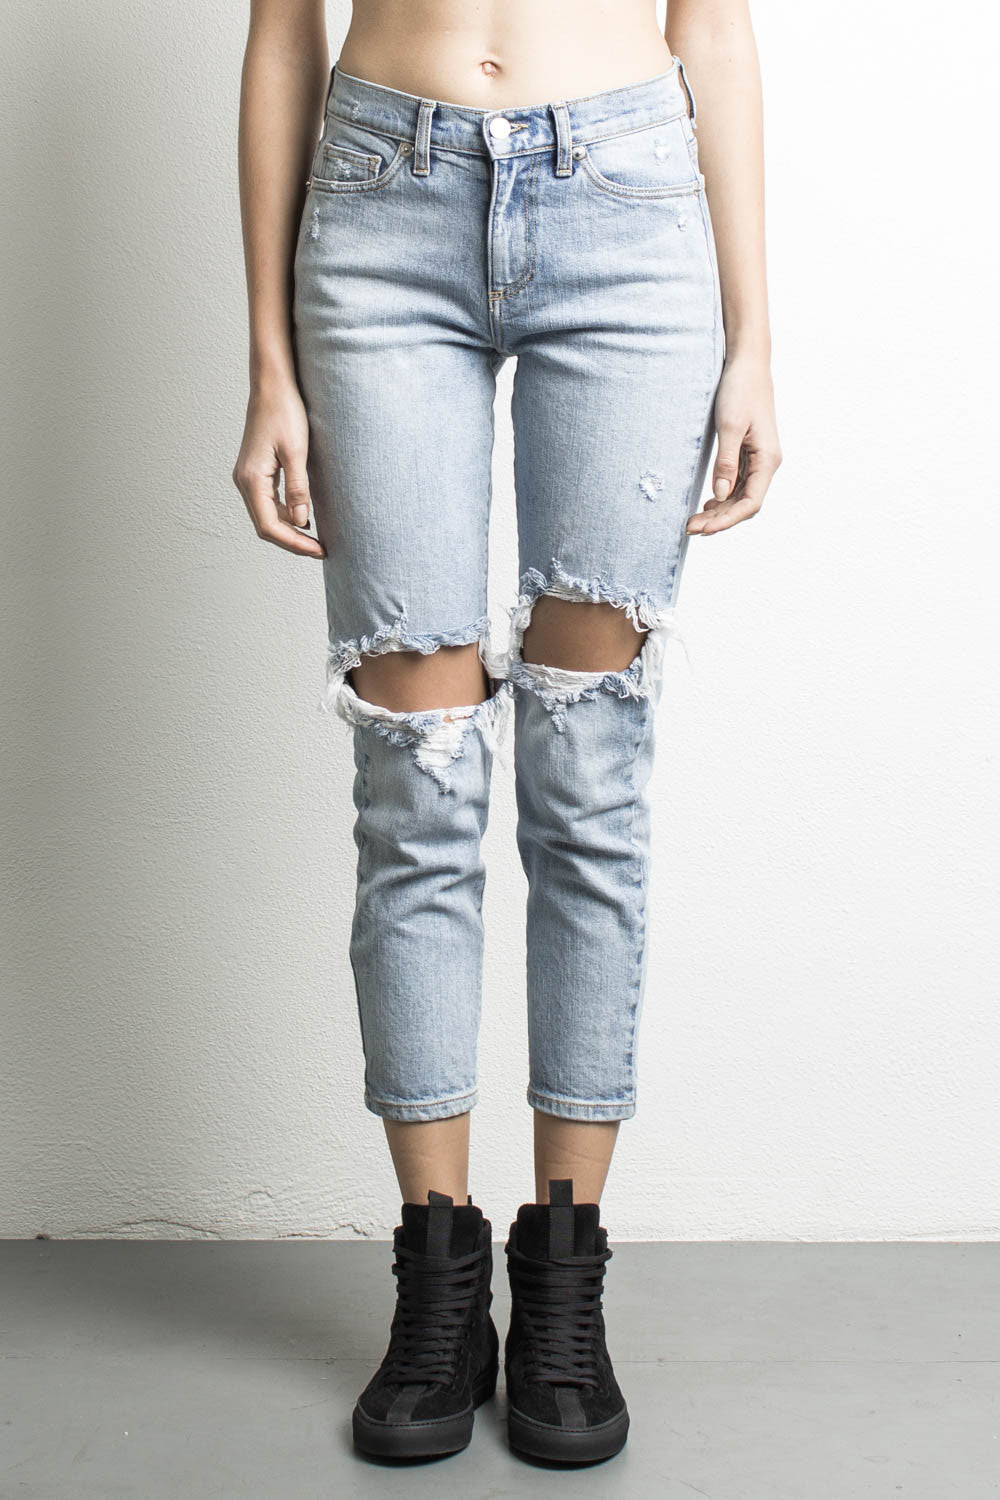 high waisted girlfriend jeans